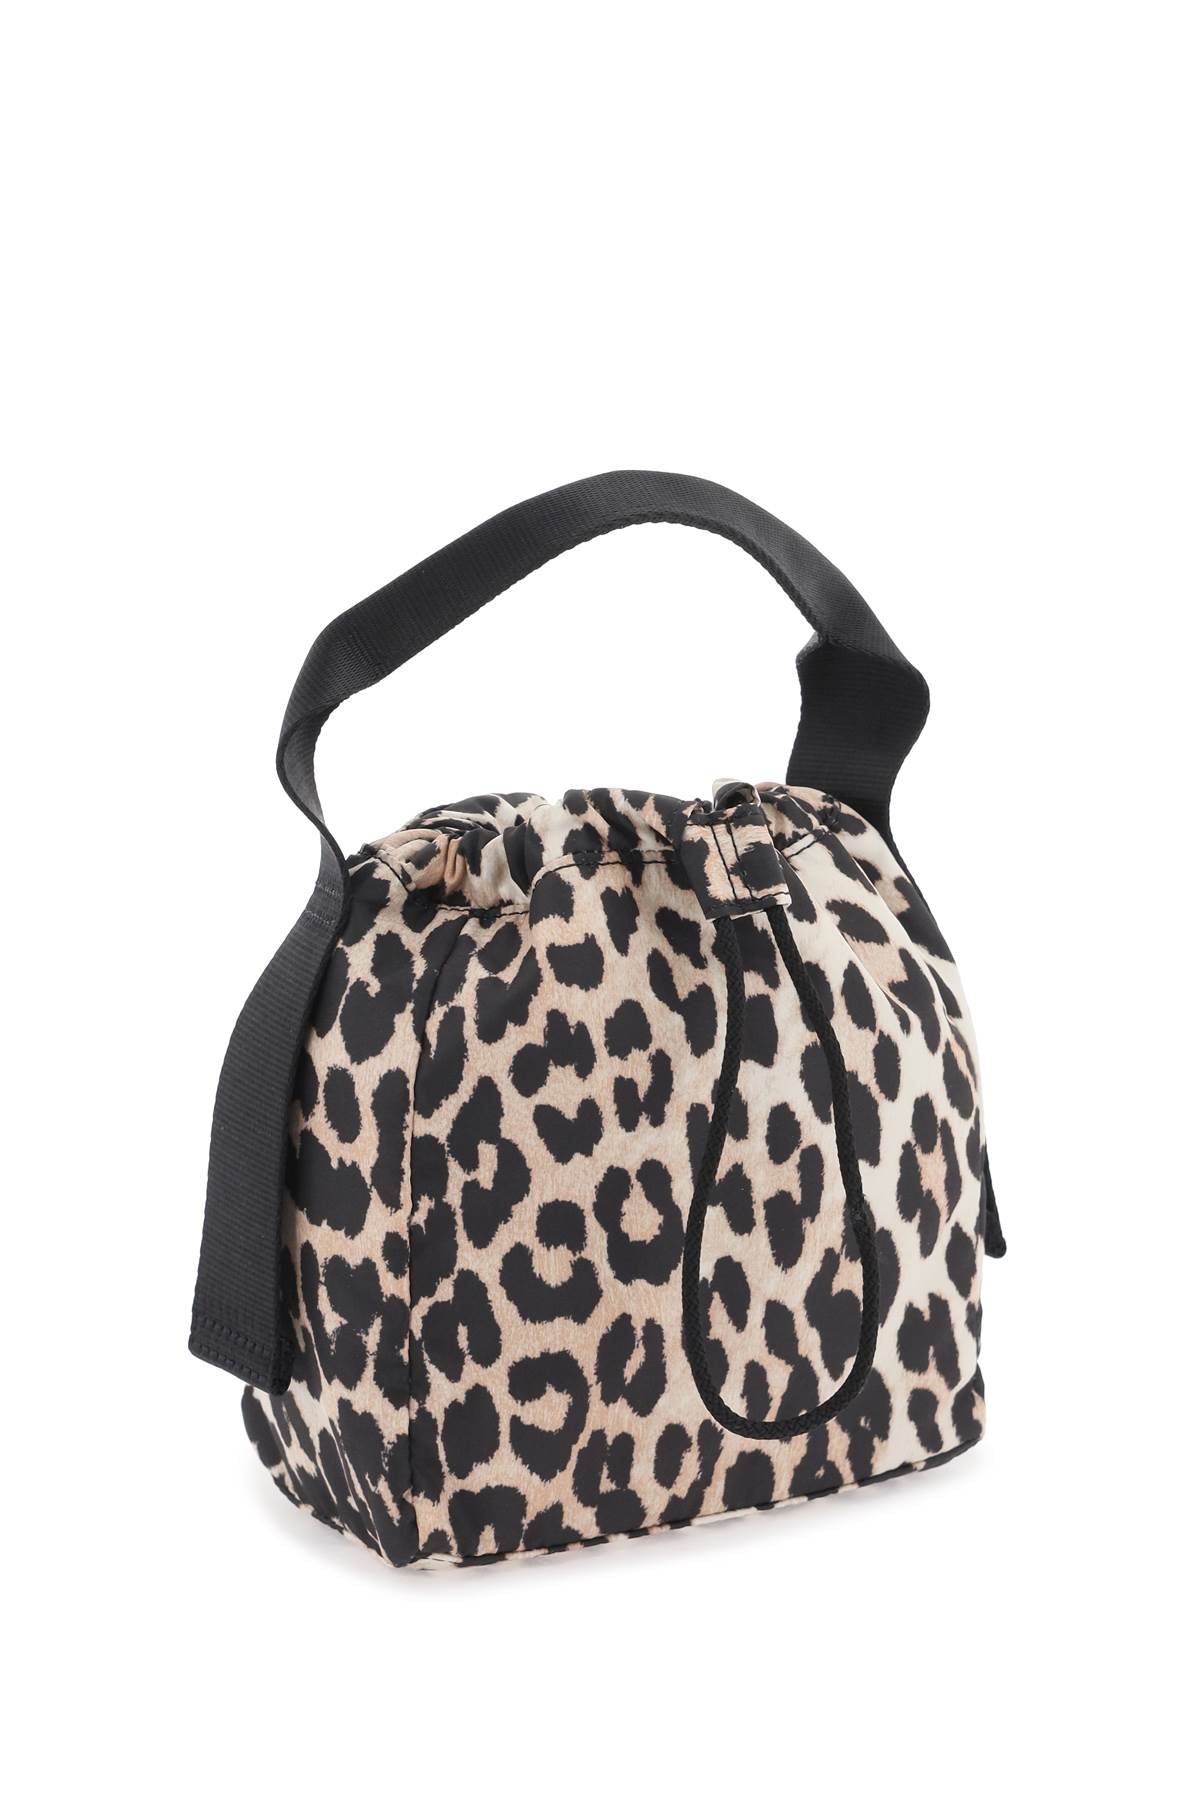 leopard tech handbag-2